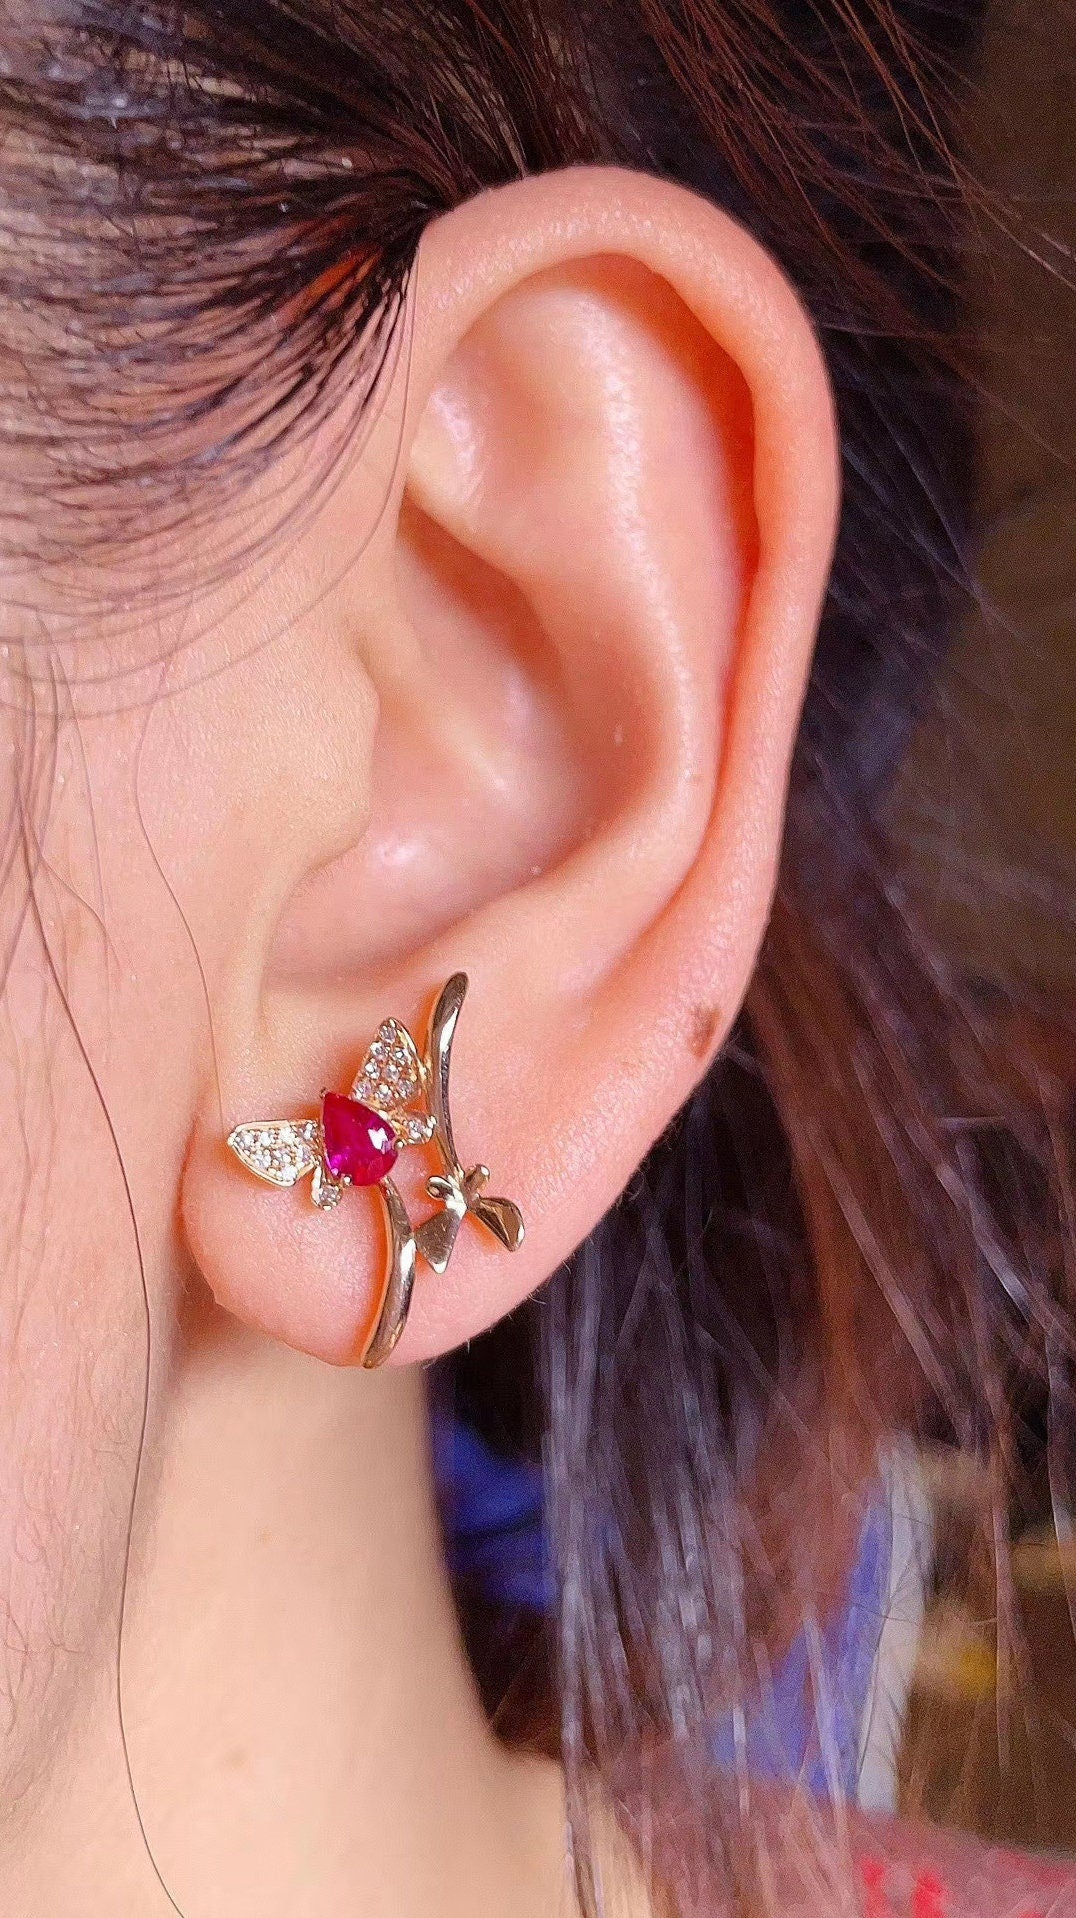 Natural Red Ruby Earrings, July Birthstone, 18K White Gold Genuine Diamonds Earrings for Women, Engagement Wedding Earrings